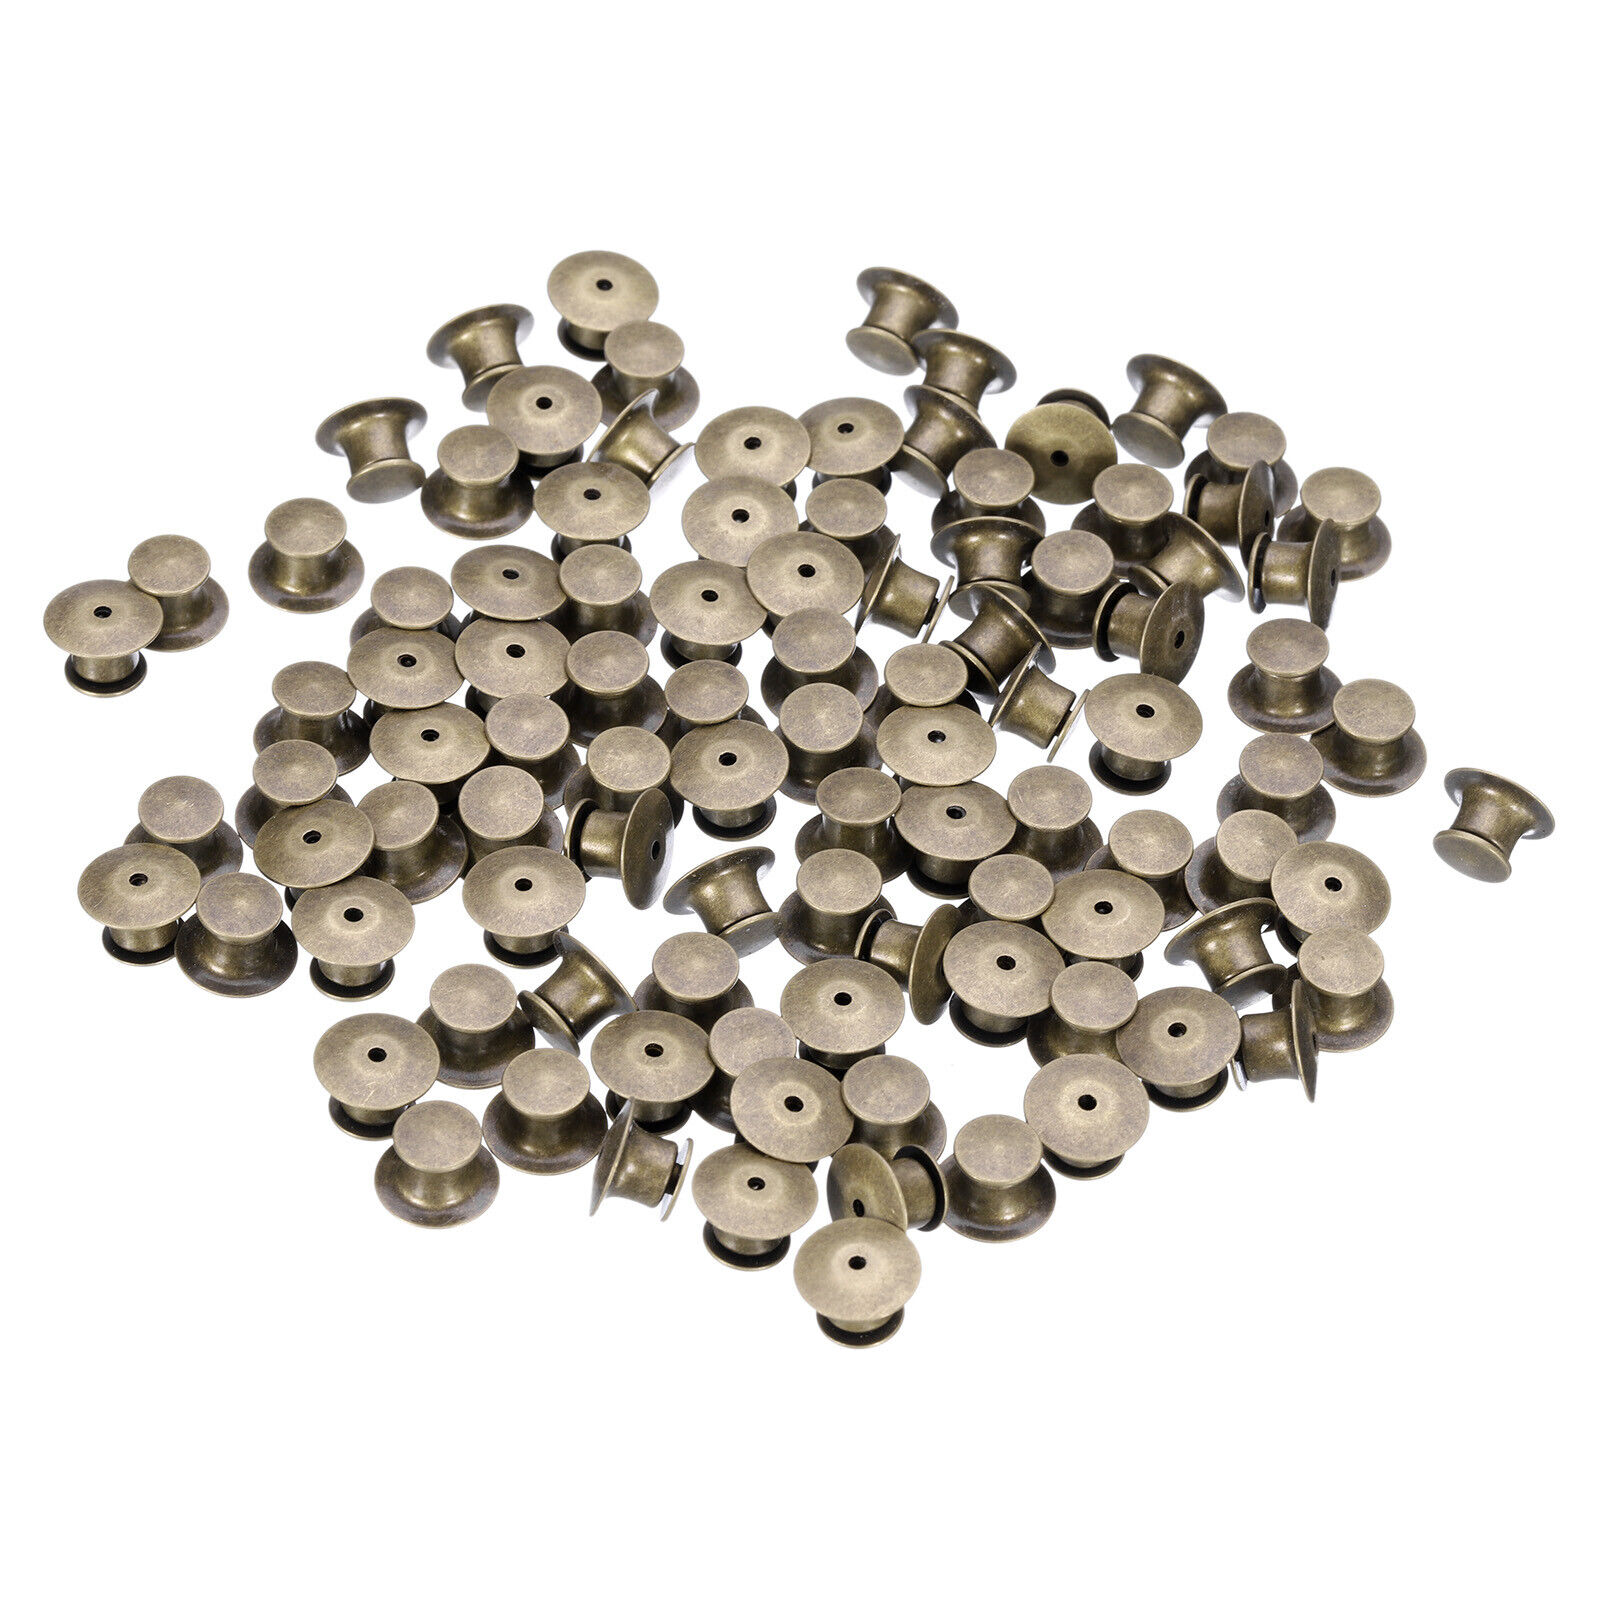 100pcs Metal Pin Backs Spring Loaded Pin keepers Locking Pin Keepers, Brown